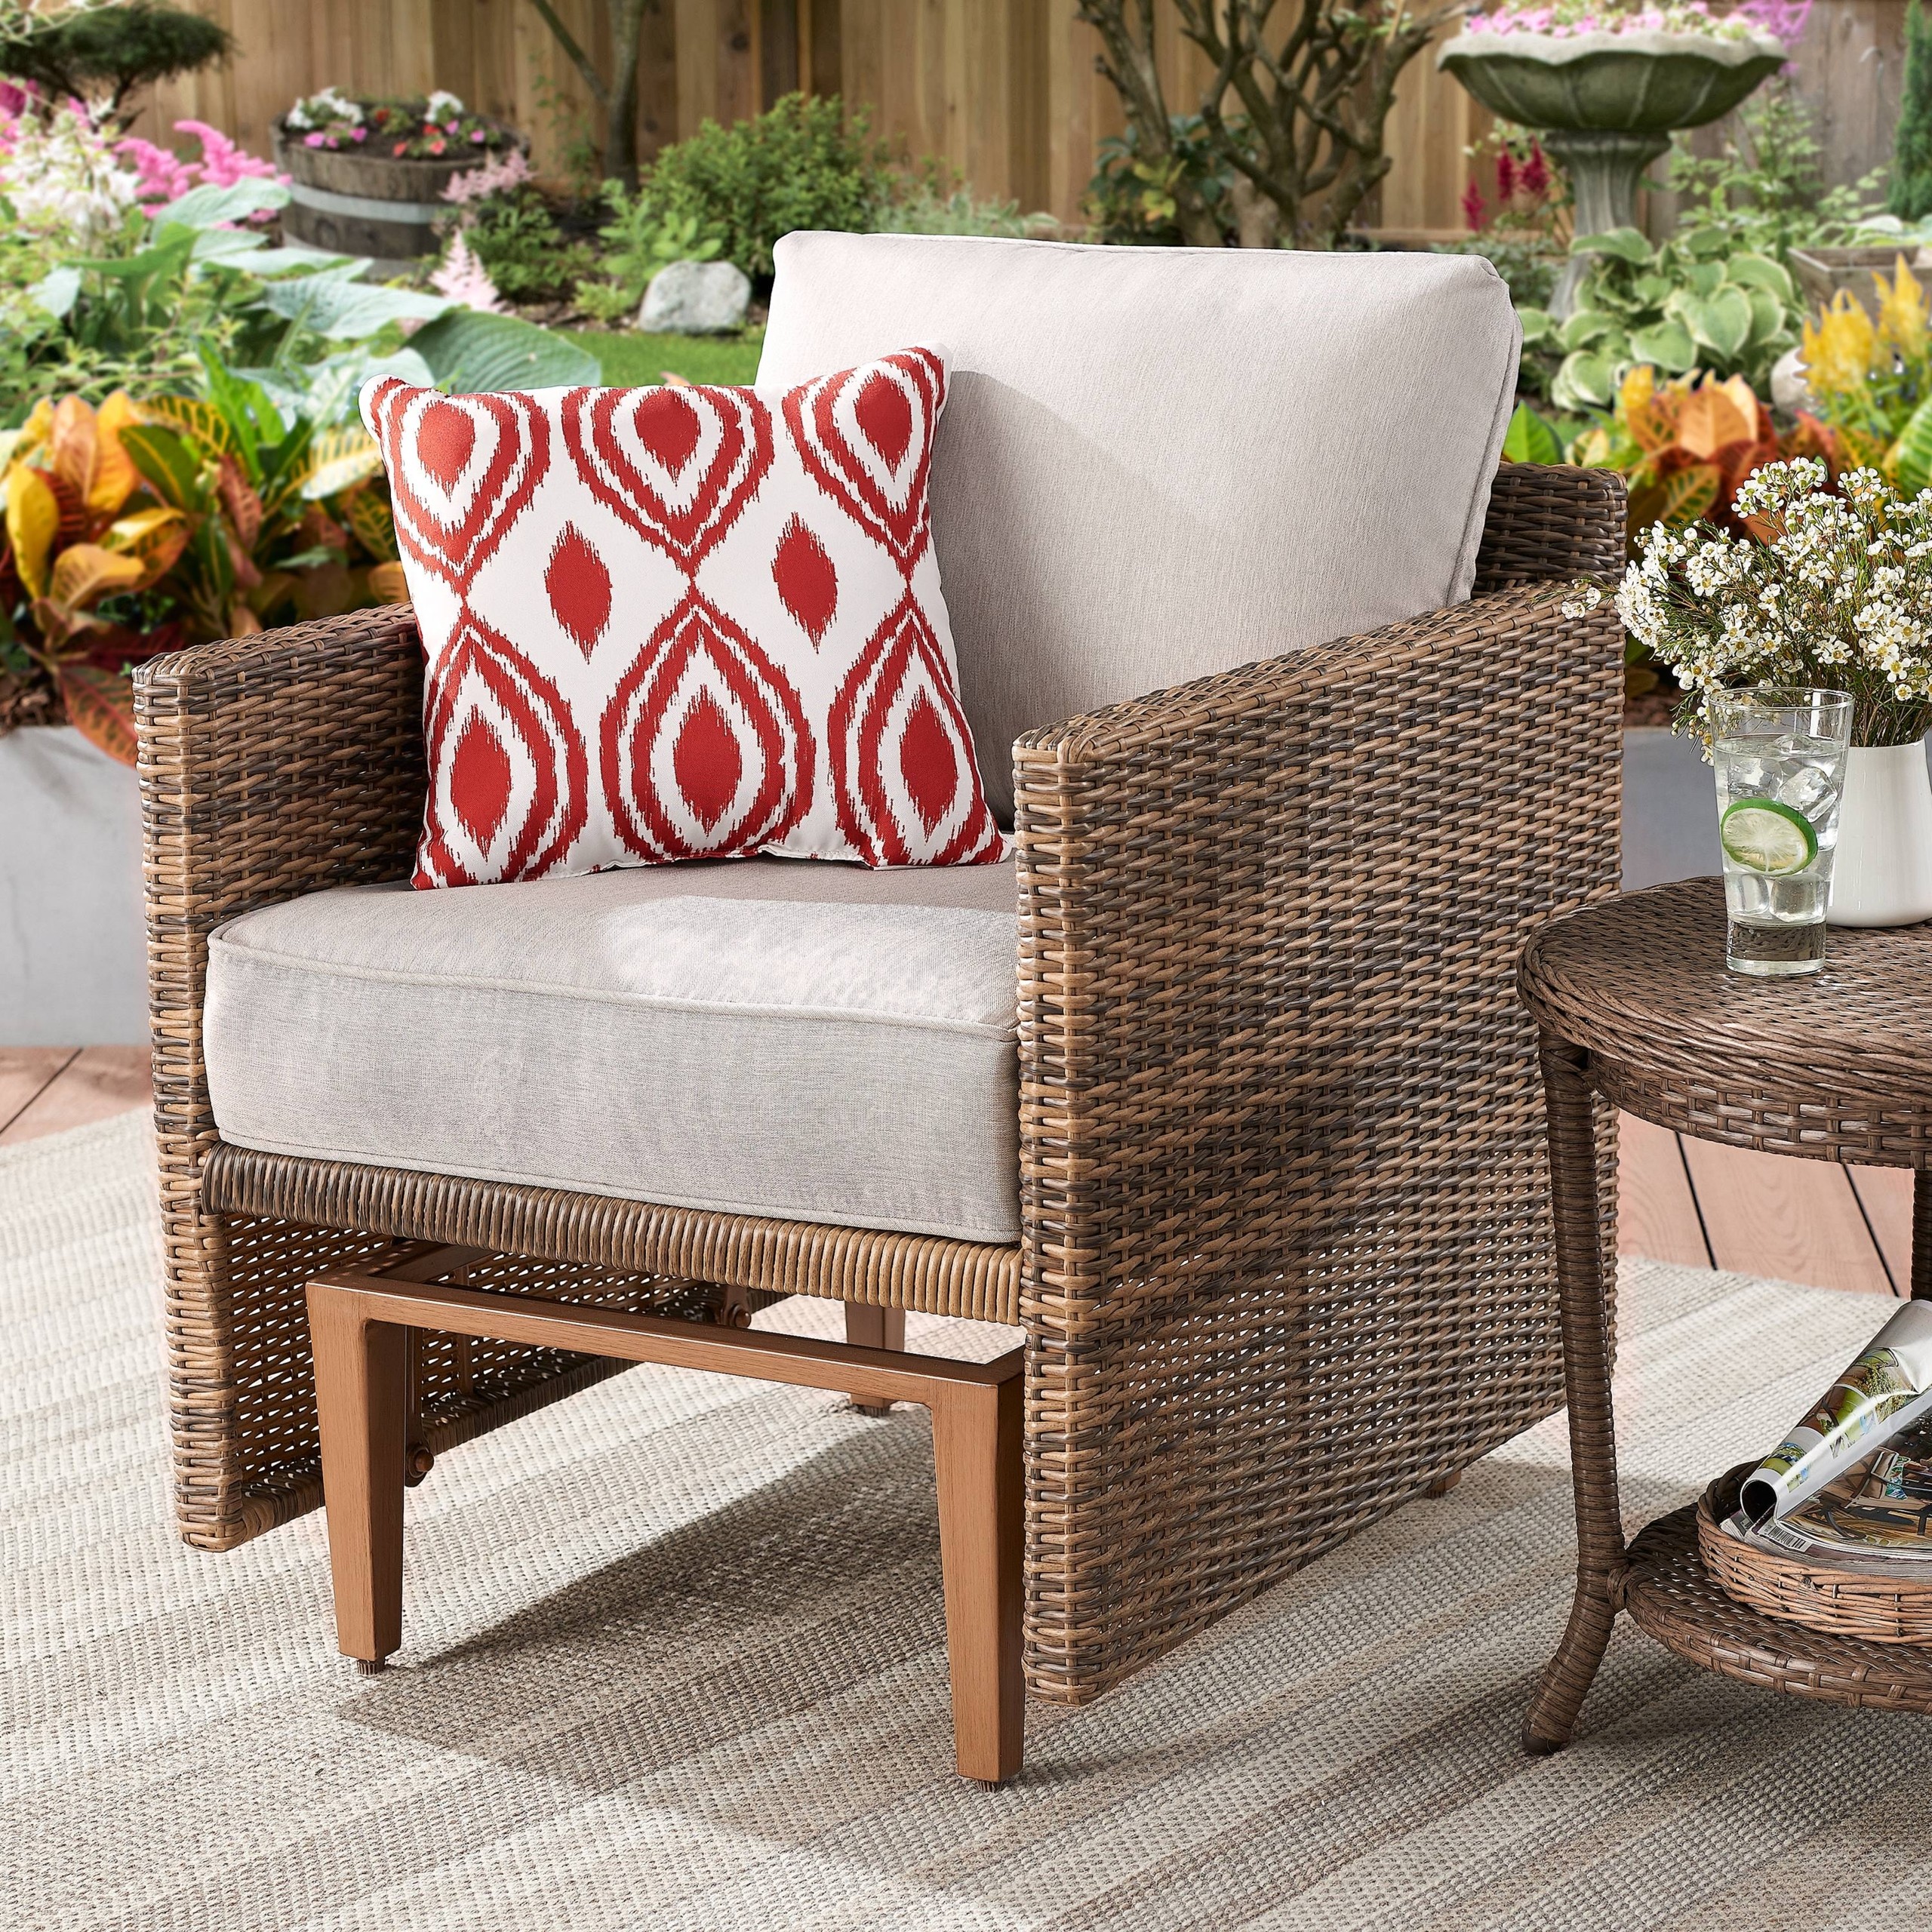 Better homes gardens davenport patio wicker glider chair